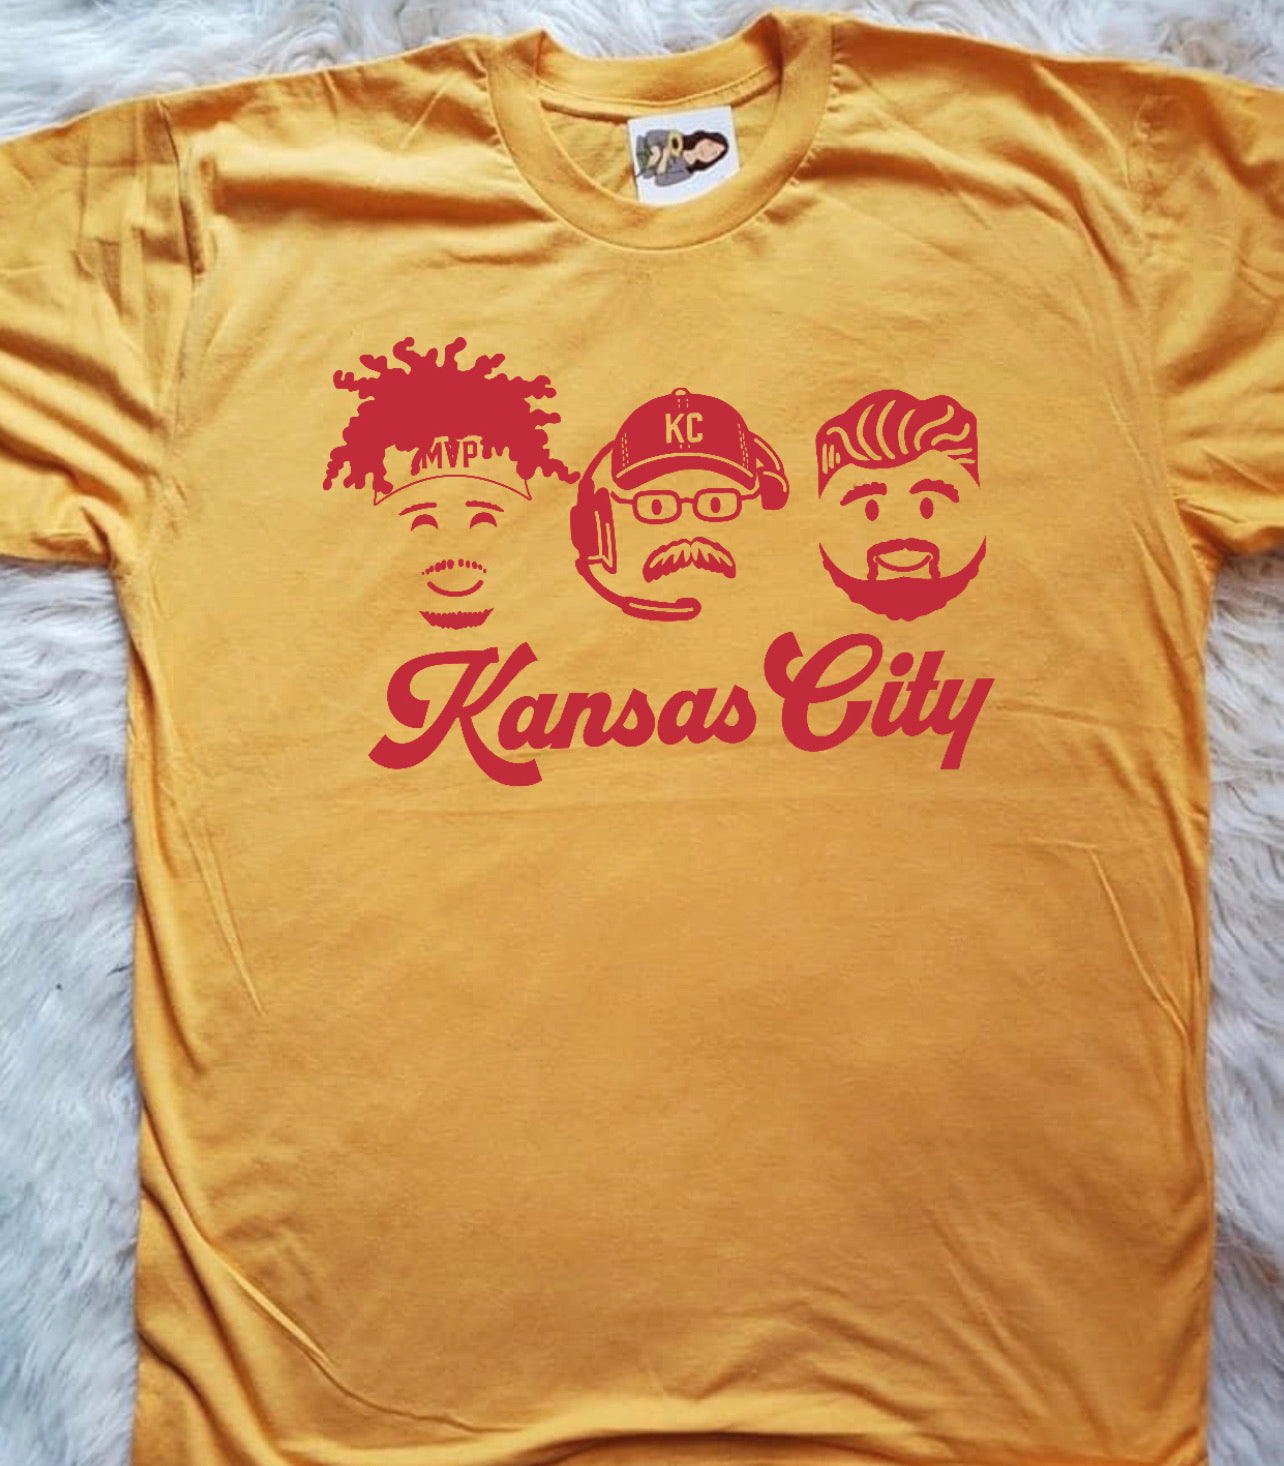 Kansas City Mahomes, Reid, Kelce Tee